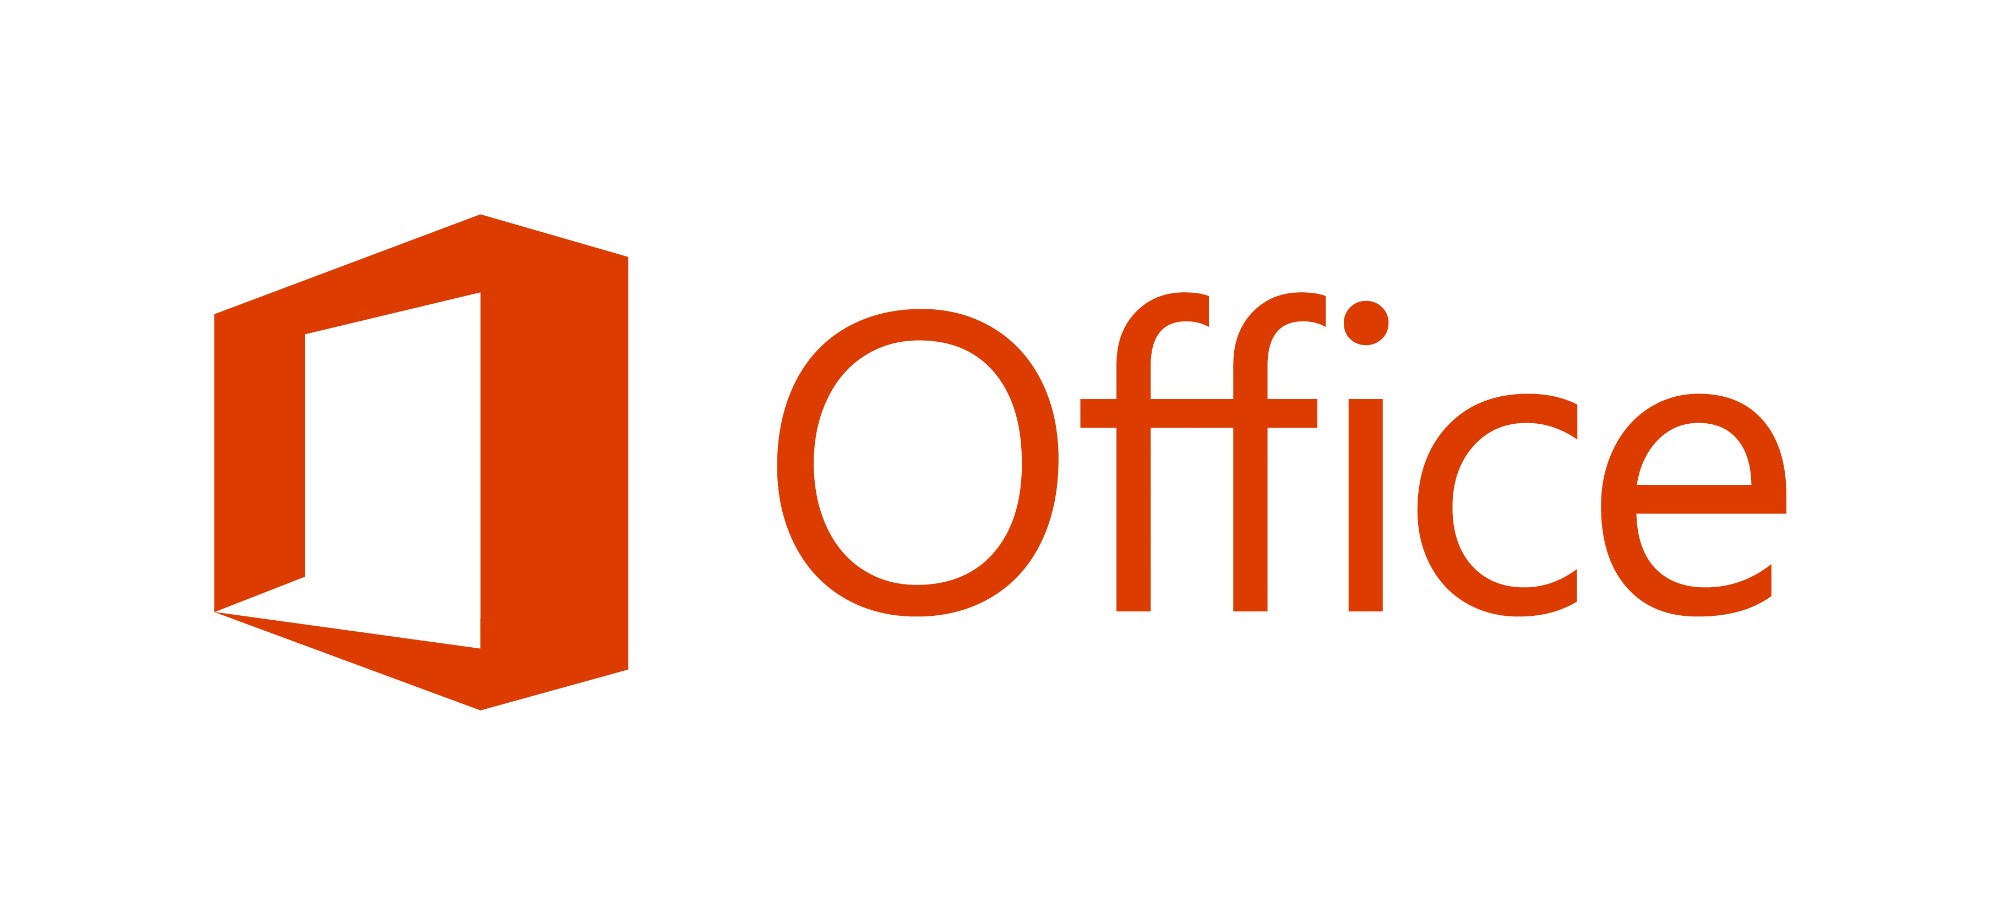 Microsoft Office 365 Home Premium 6 license(s) 1 year(s) Multilingual